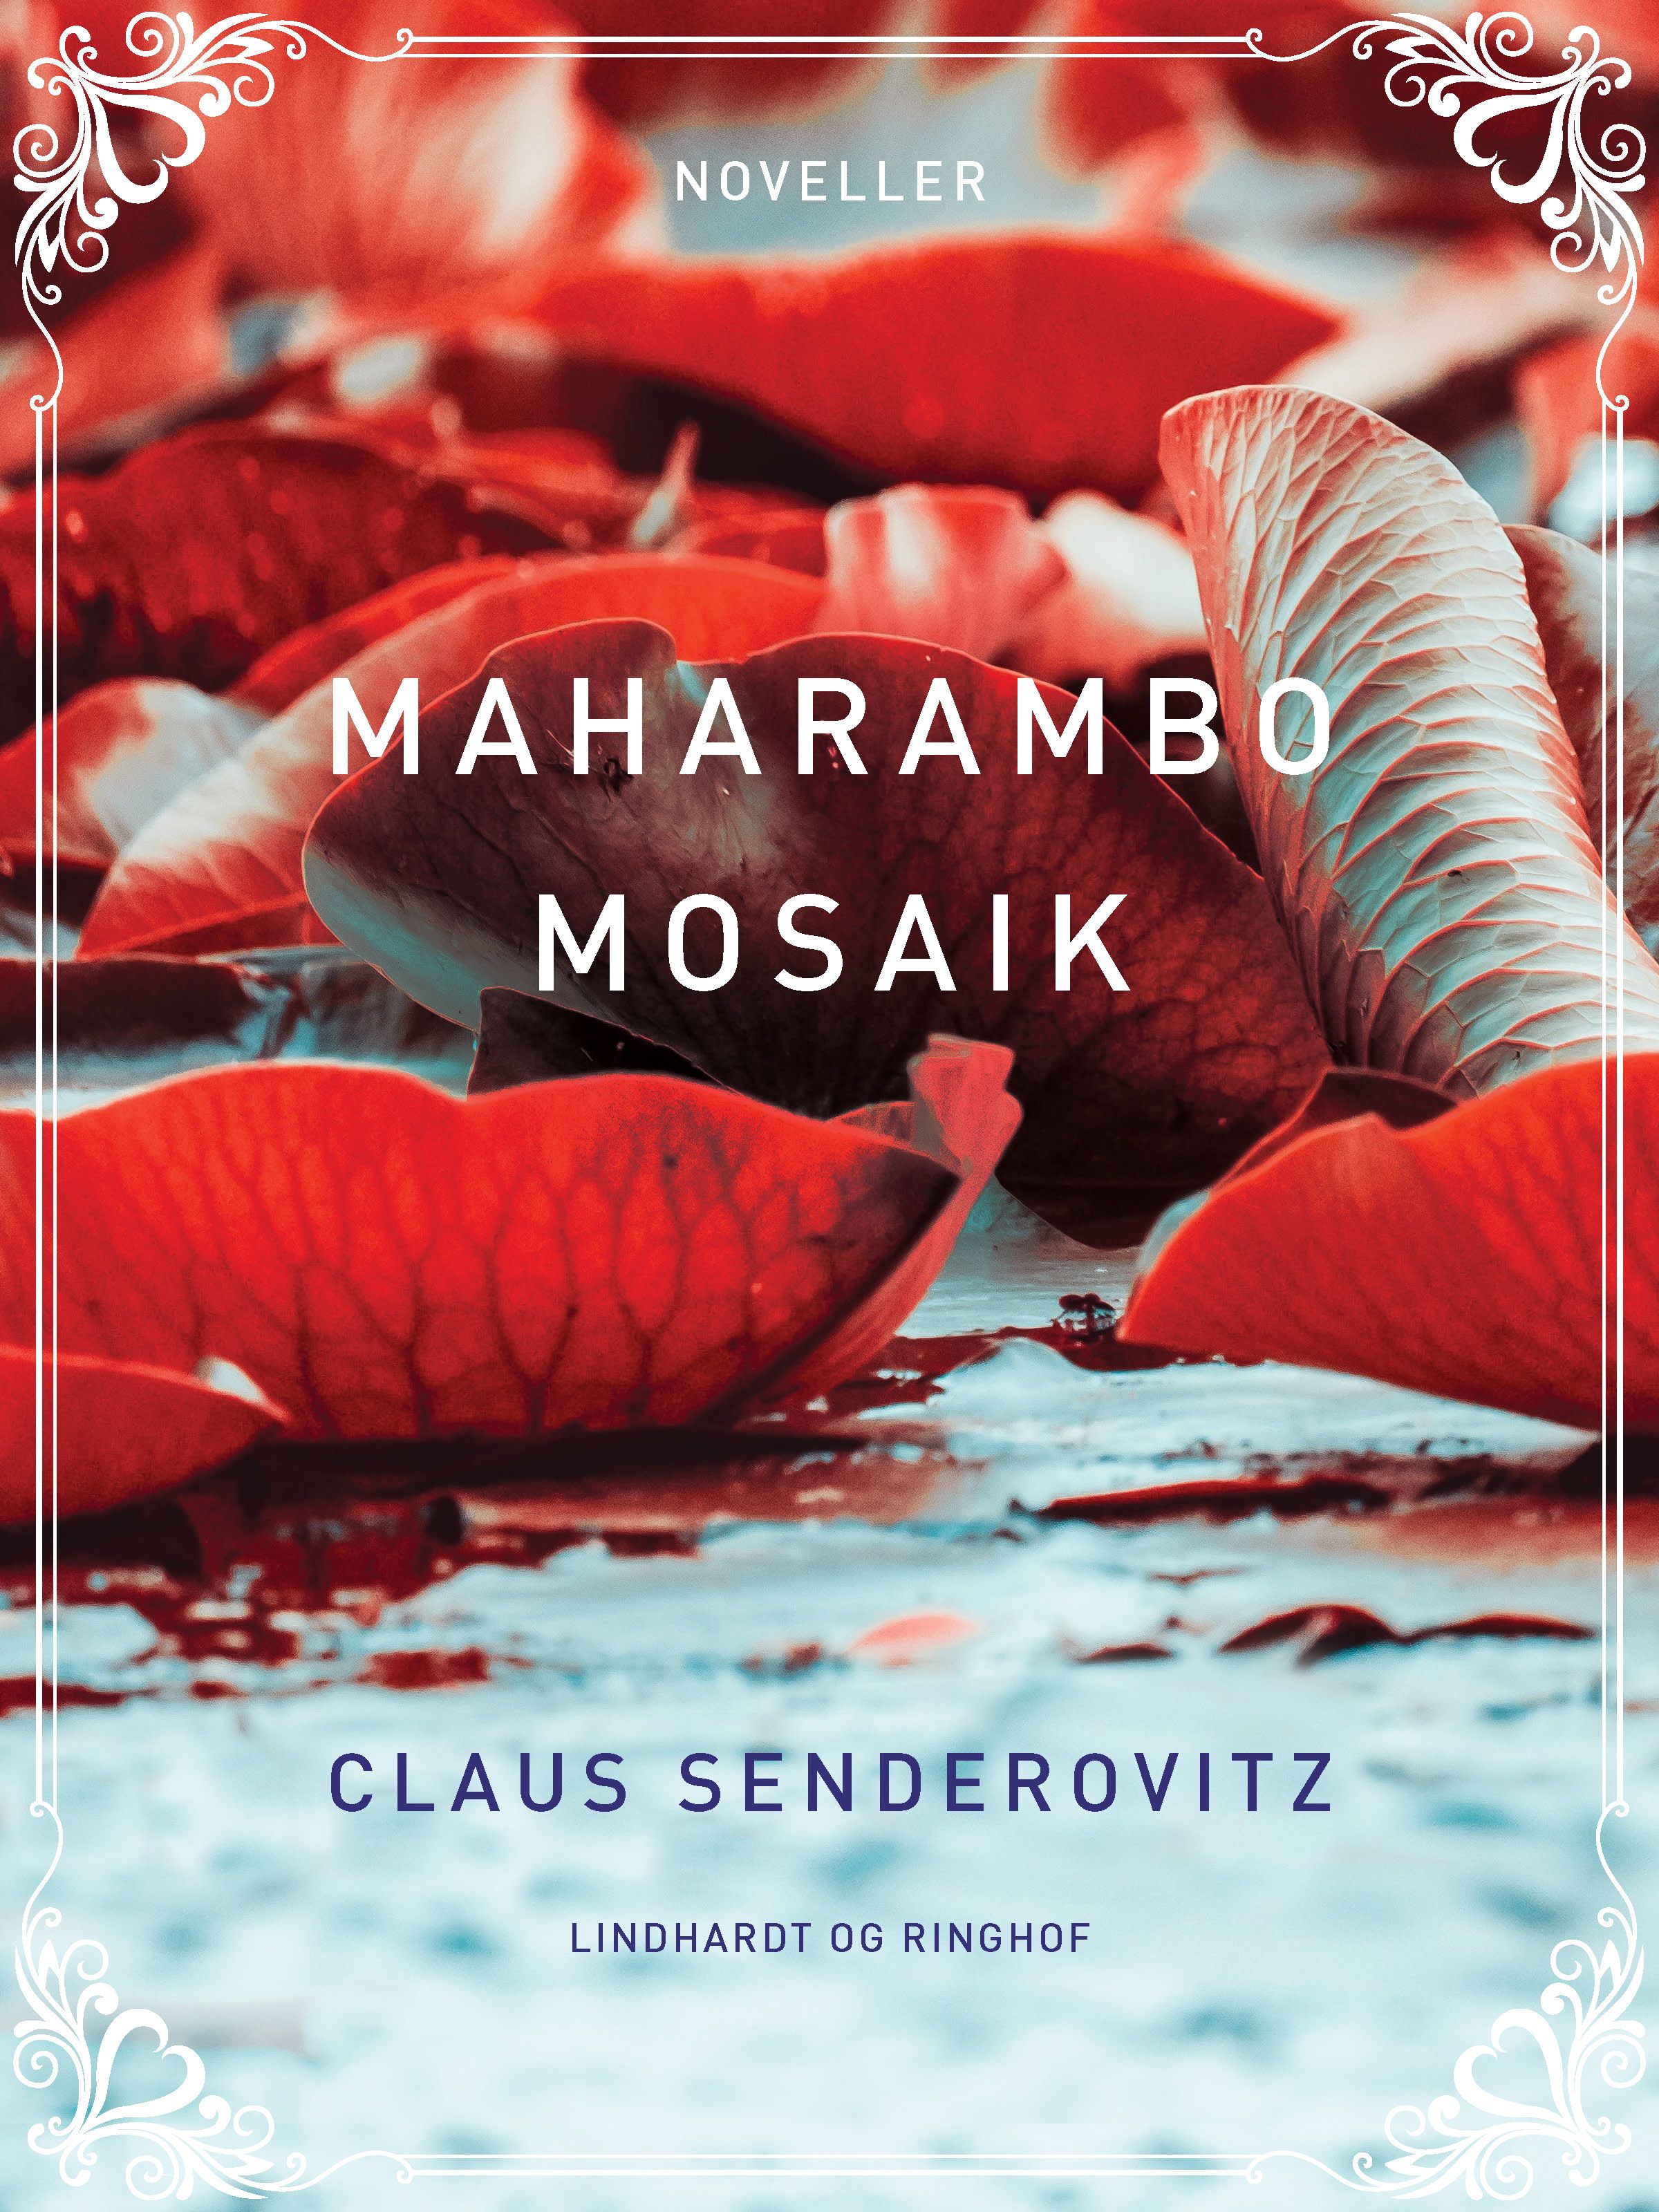 Maharambo mosaik, eBook by Claus Senderovitz